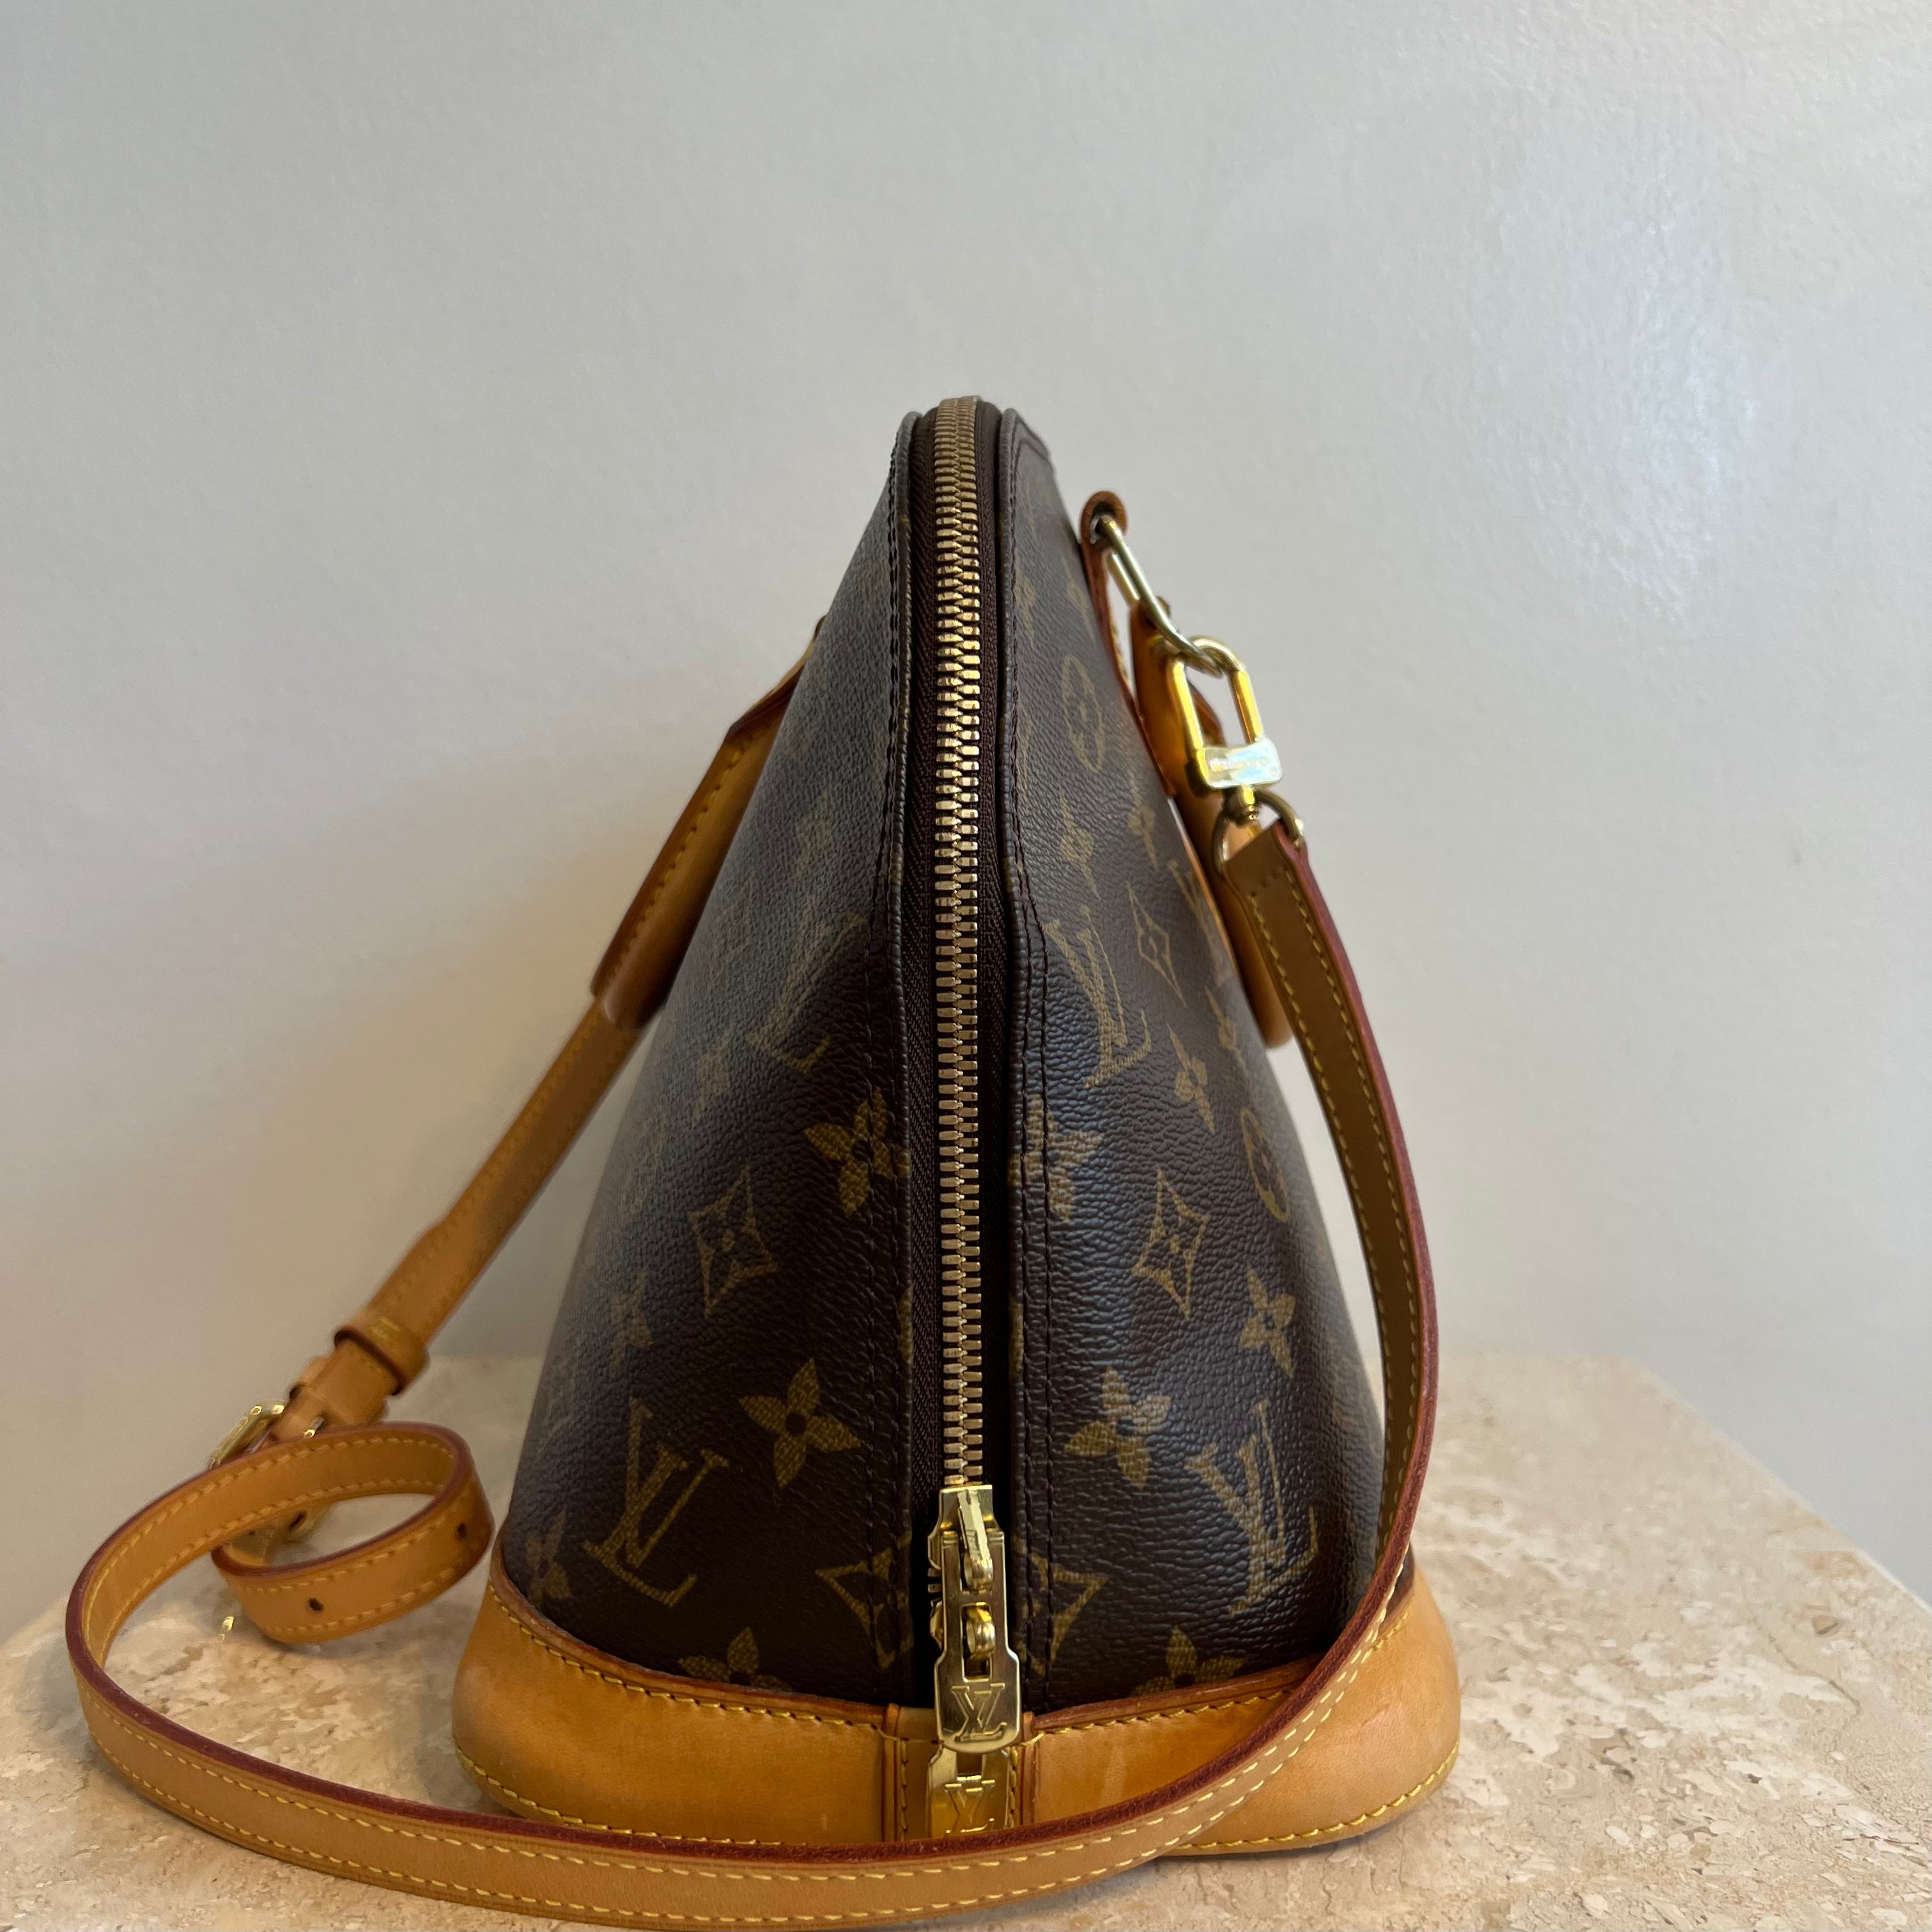 Sold at Auction: Louis Vuitton Alma PM With Shoulder Strap. 32cm W